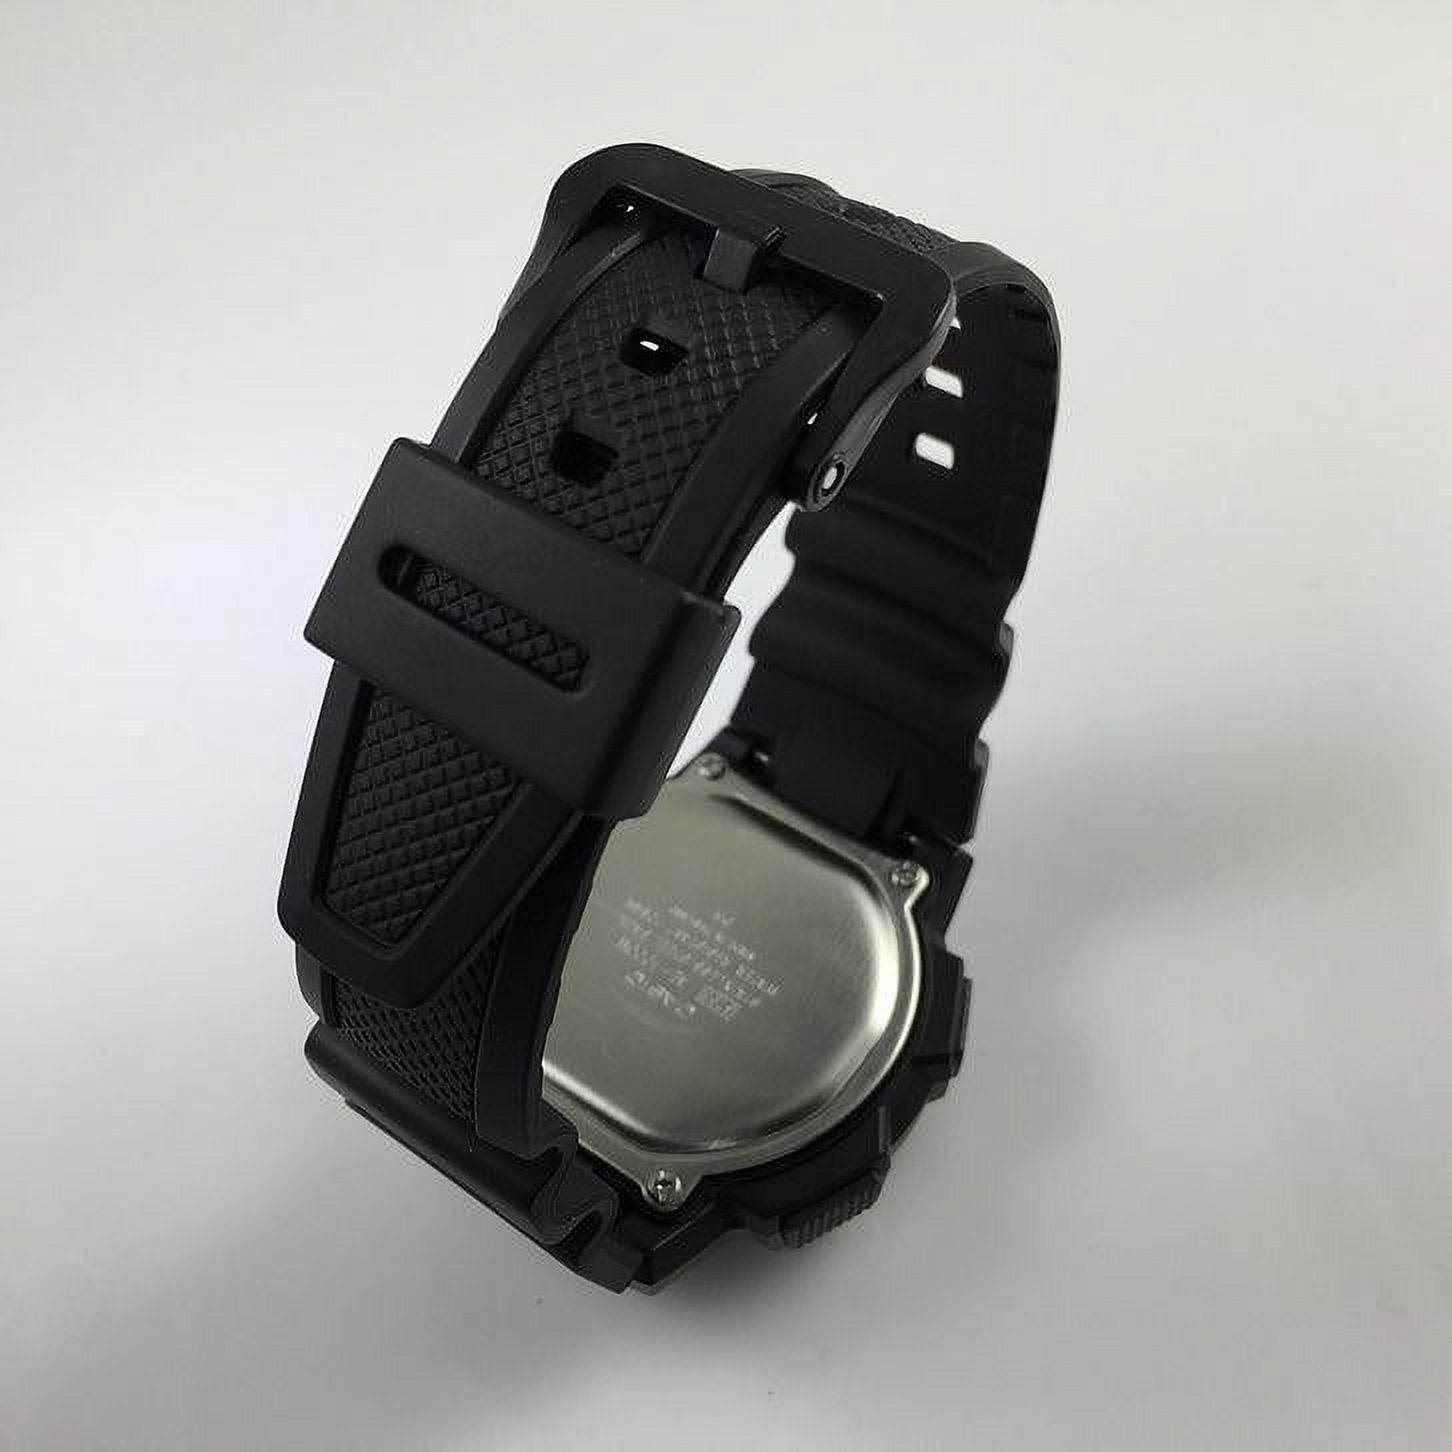 Casio Men's World Time Digital Sport Watch, Black/Silver AE1000W-1BV - image 4 of 4